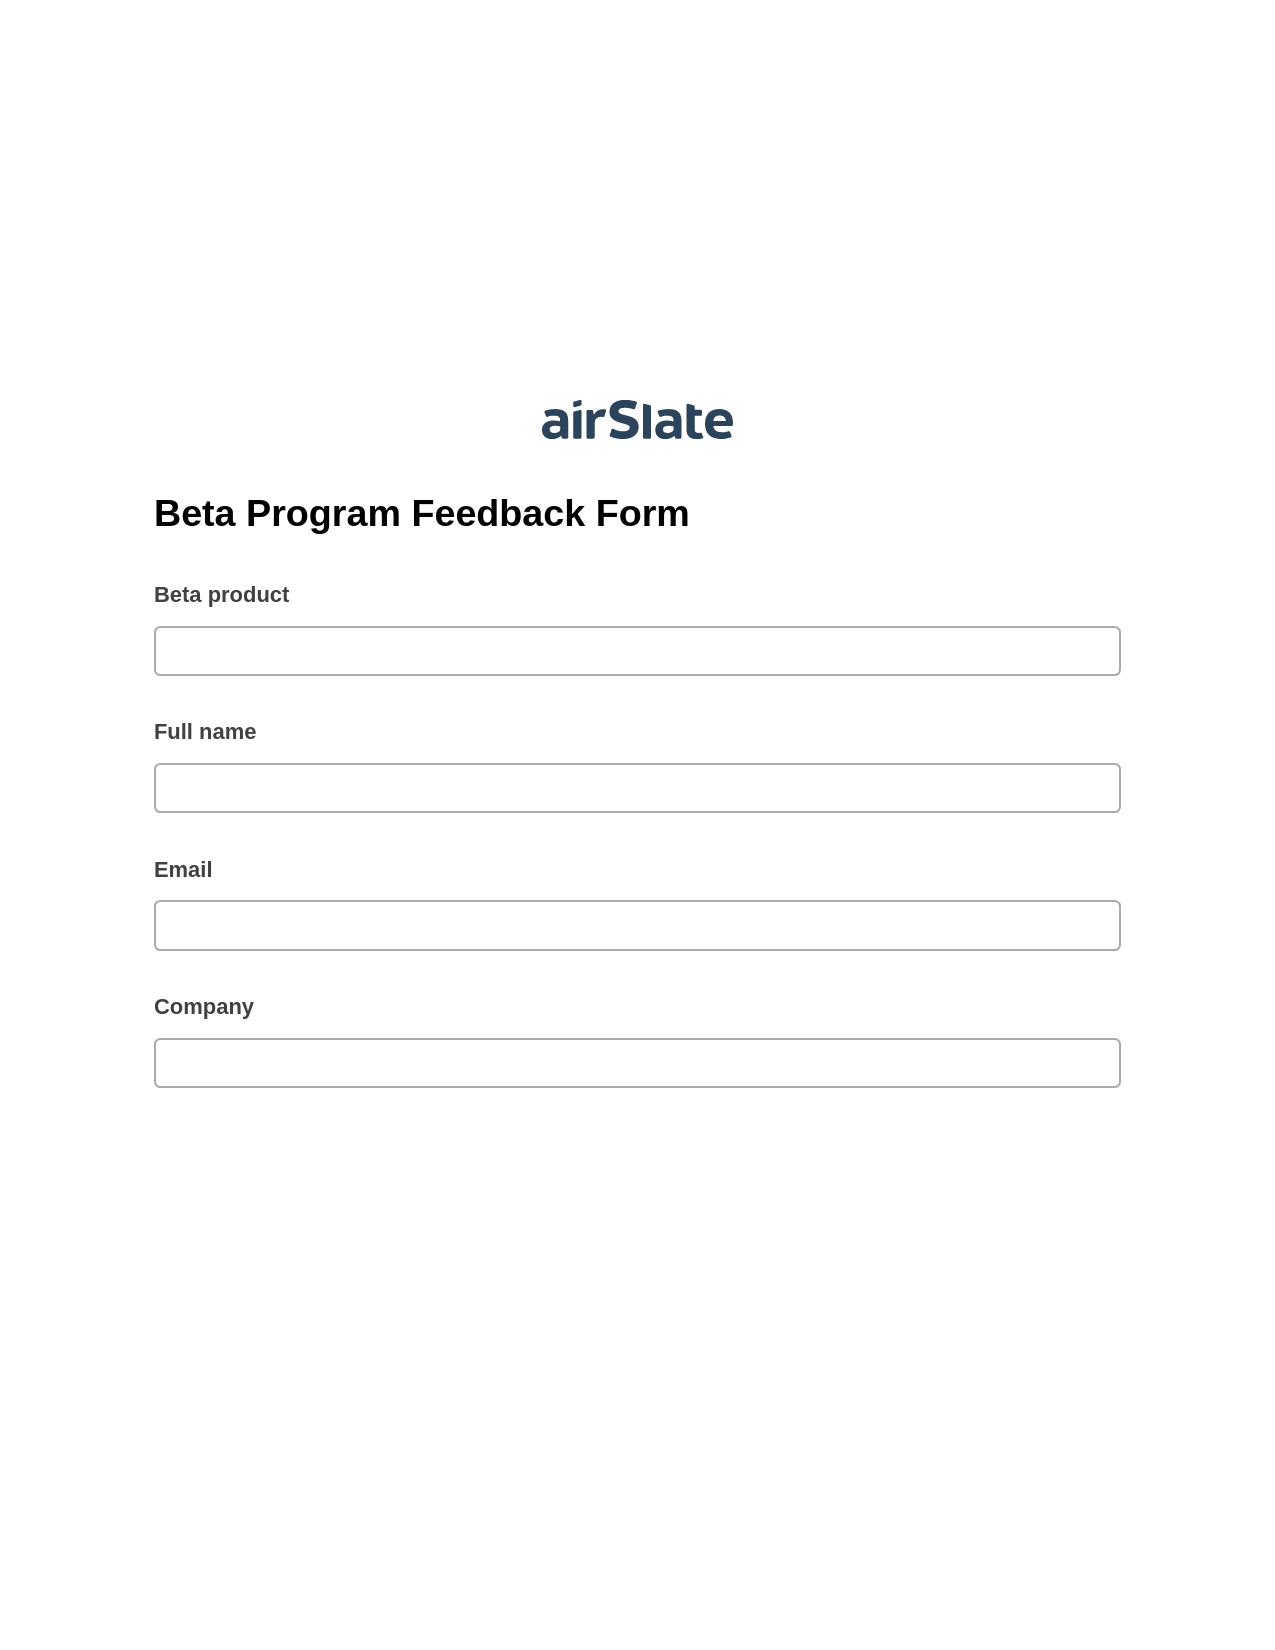 Beta Program Feedback Form Pre-fill from MySQL Bot, Send a Slate with Roles Bot, Dropbox Bot